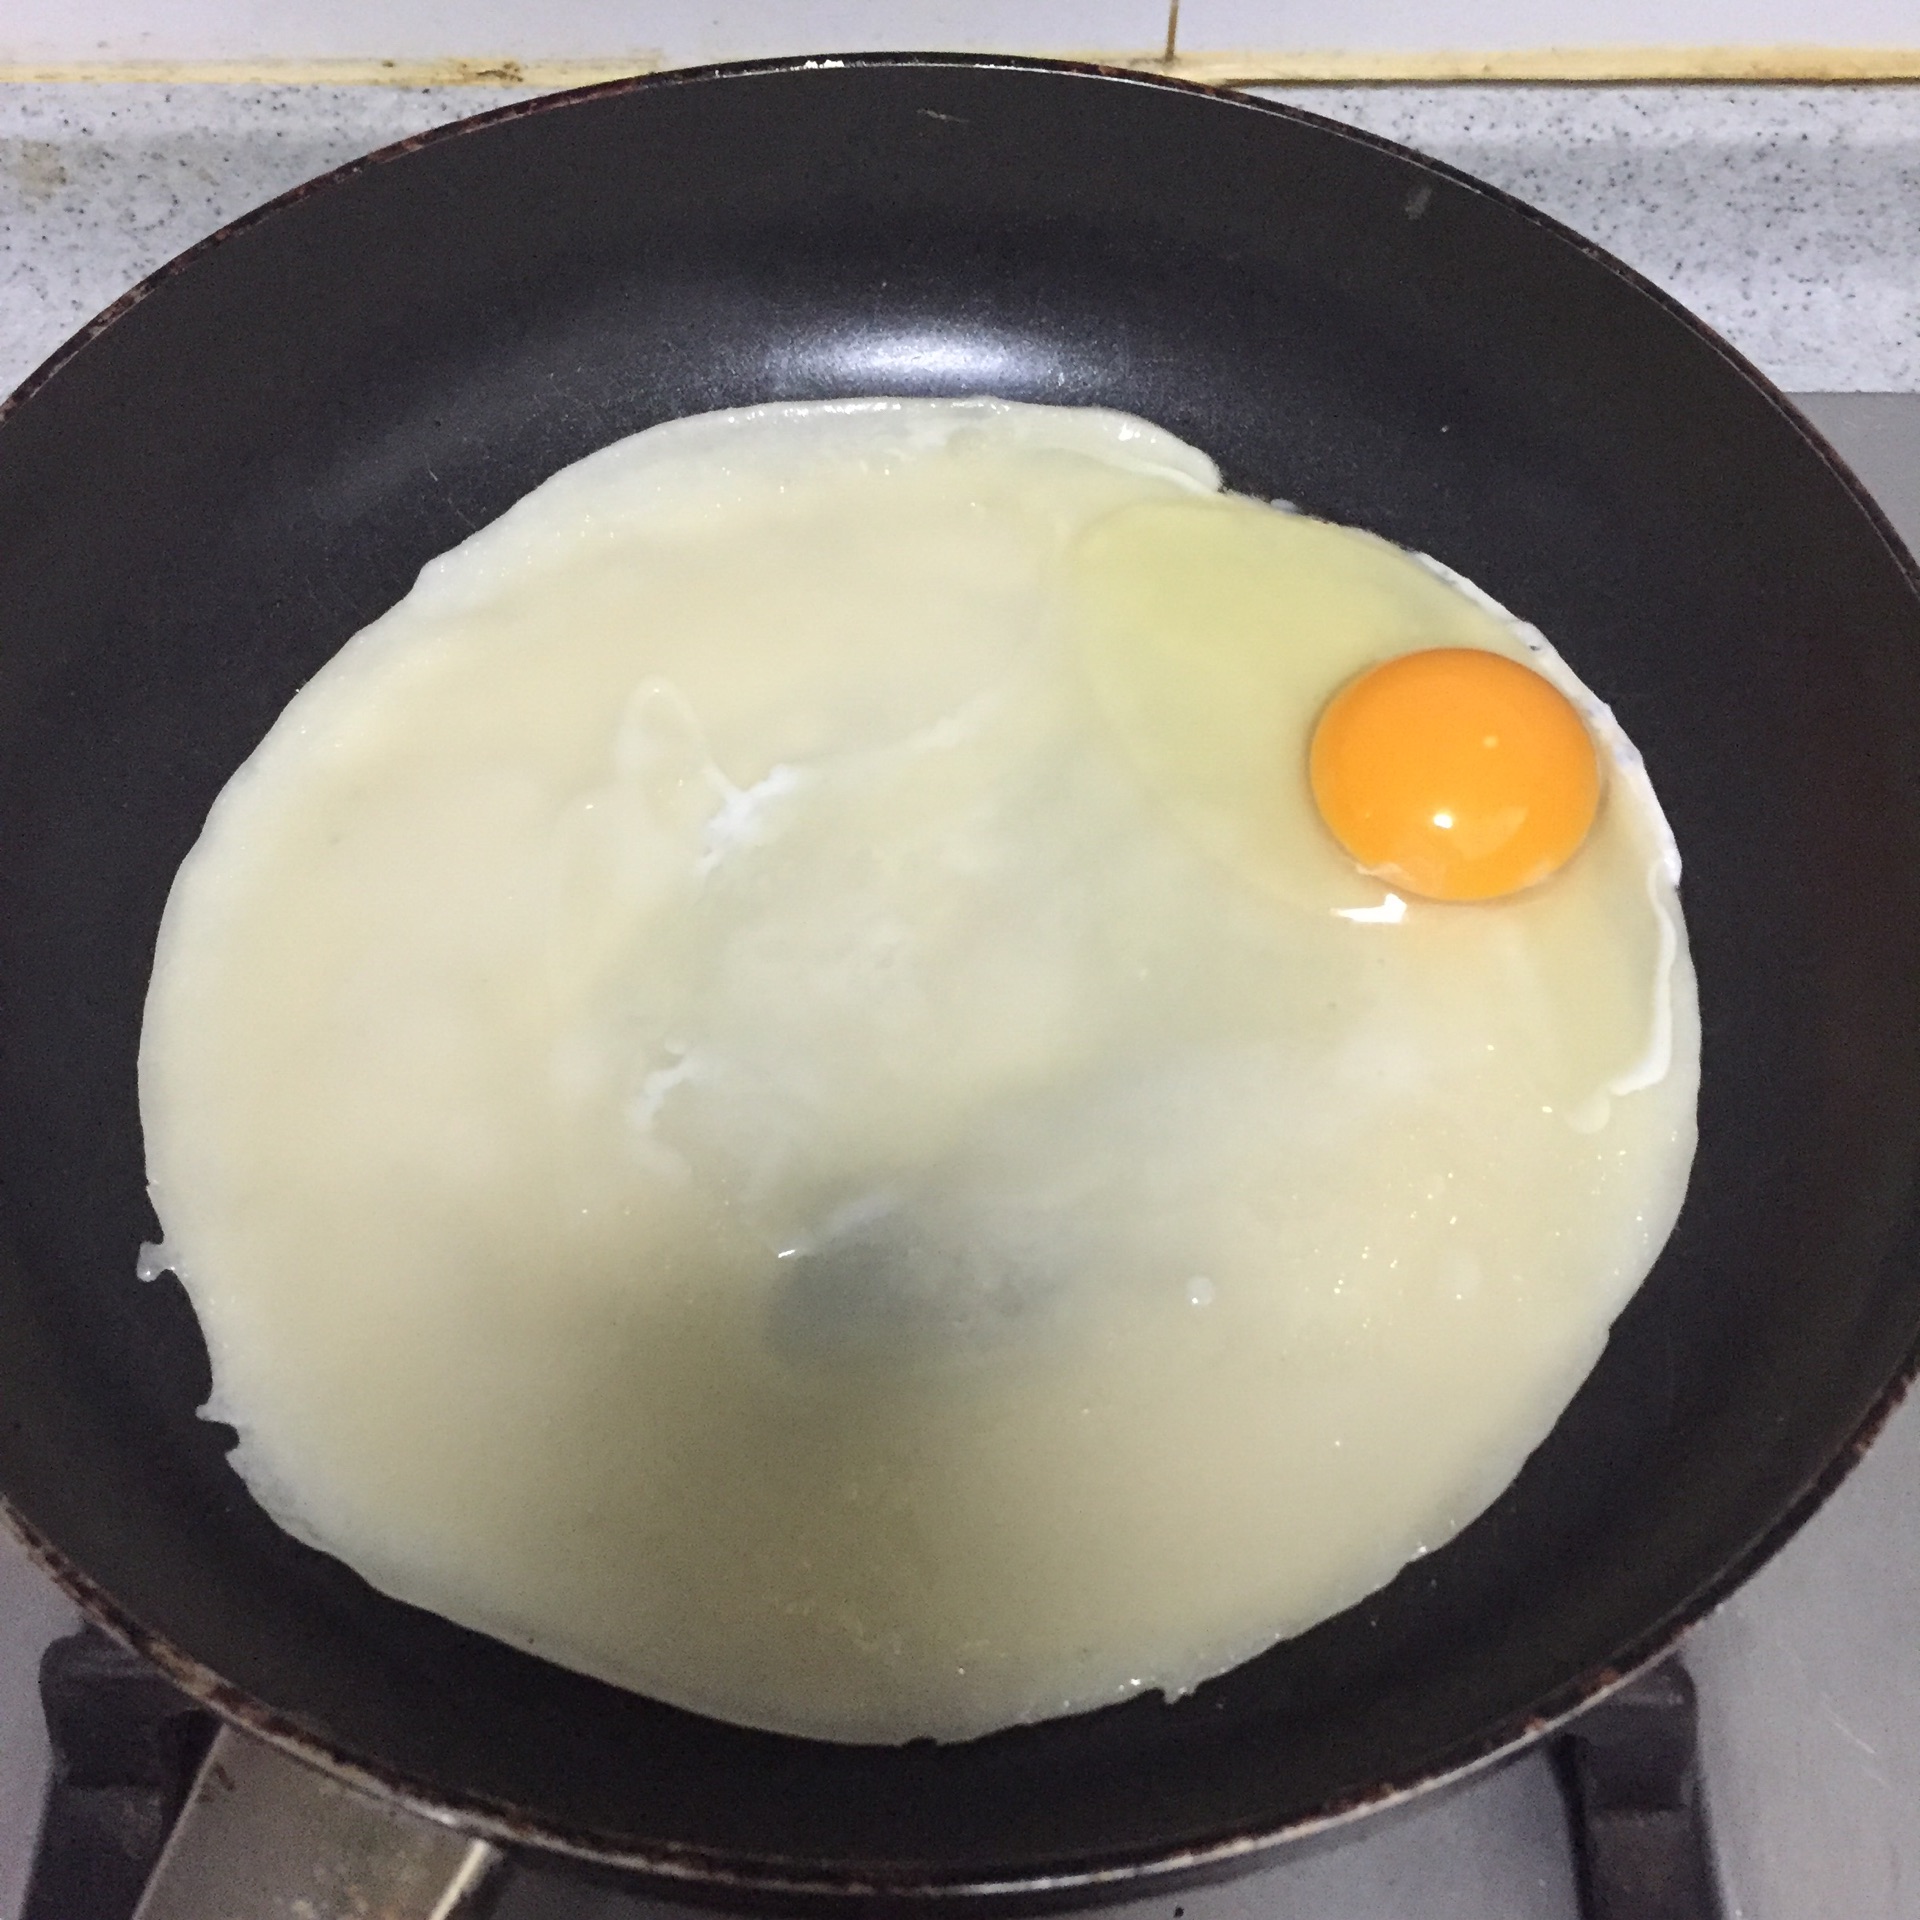 frying - How do I make prettier fried eggs? - Seasoned Advice